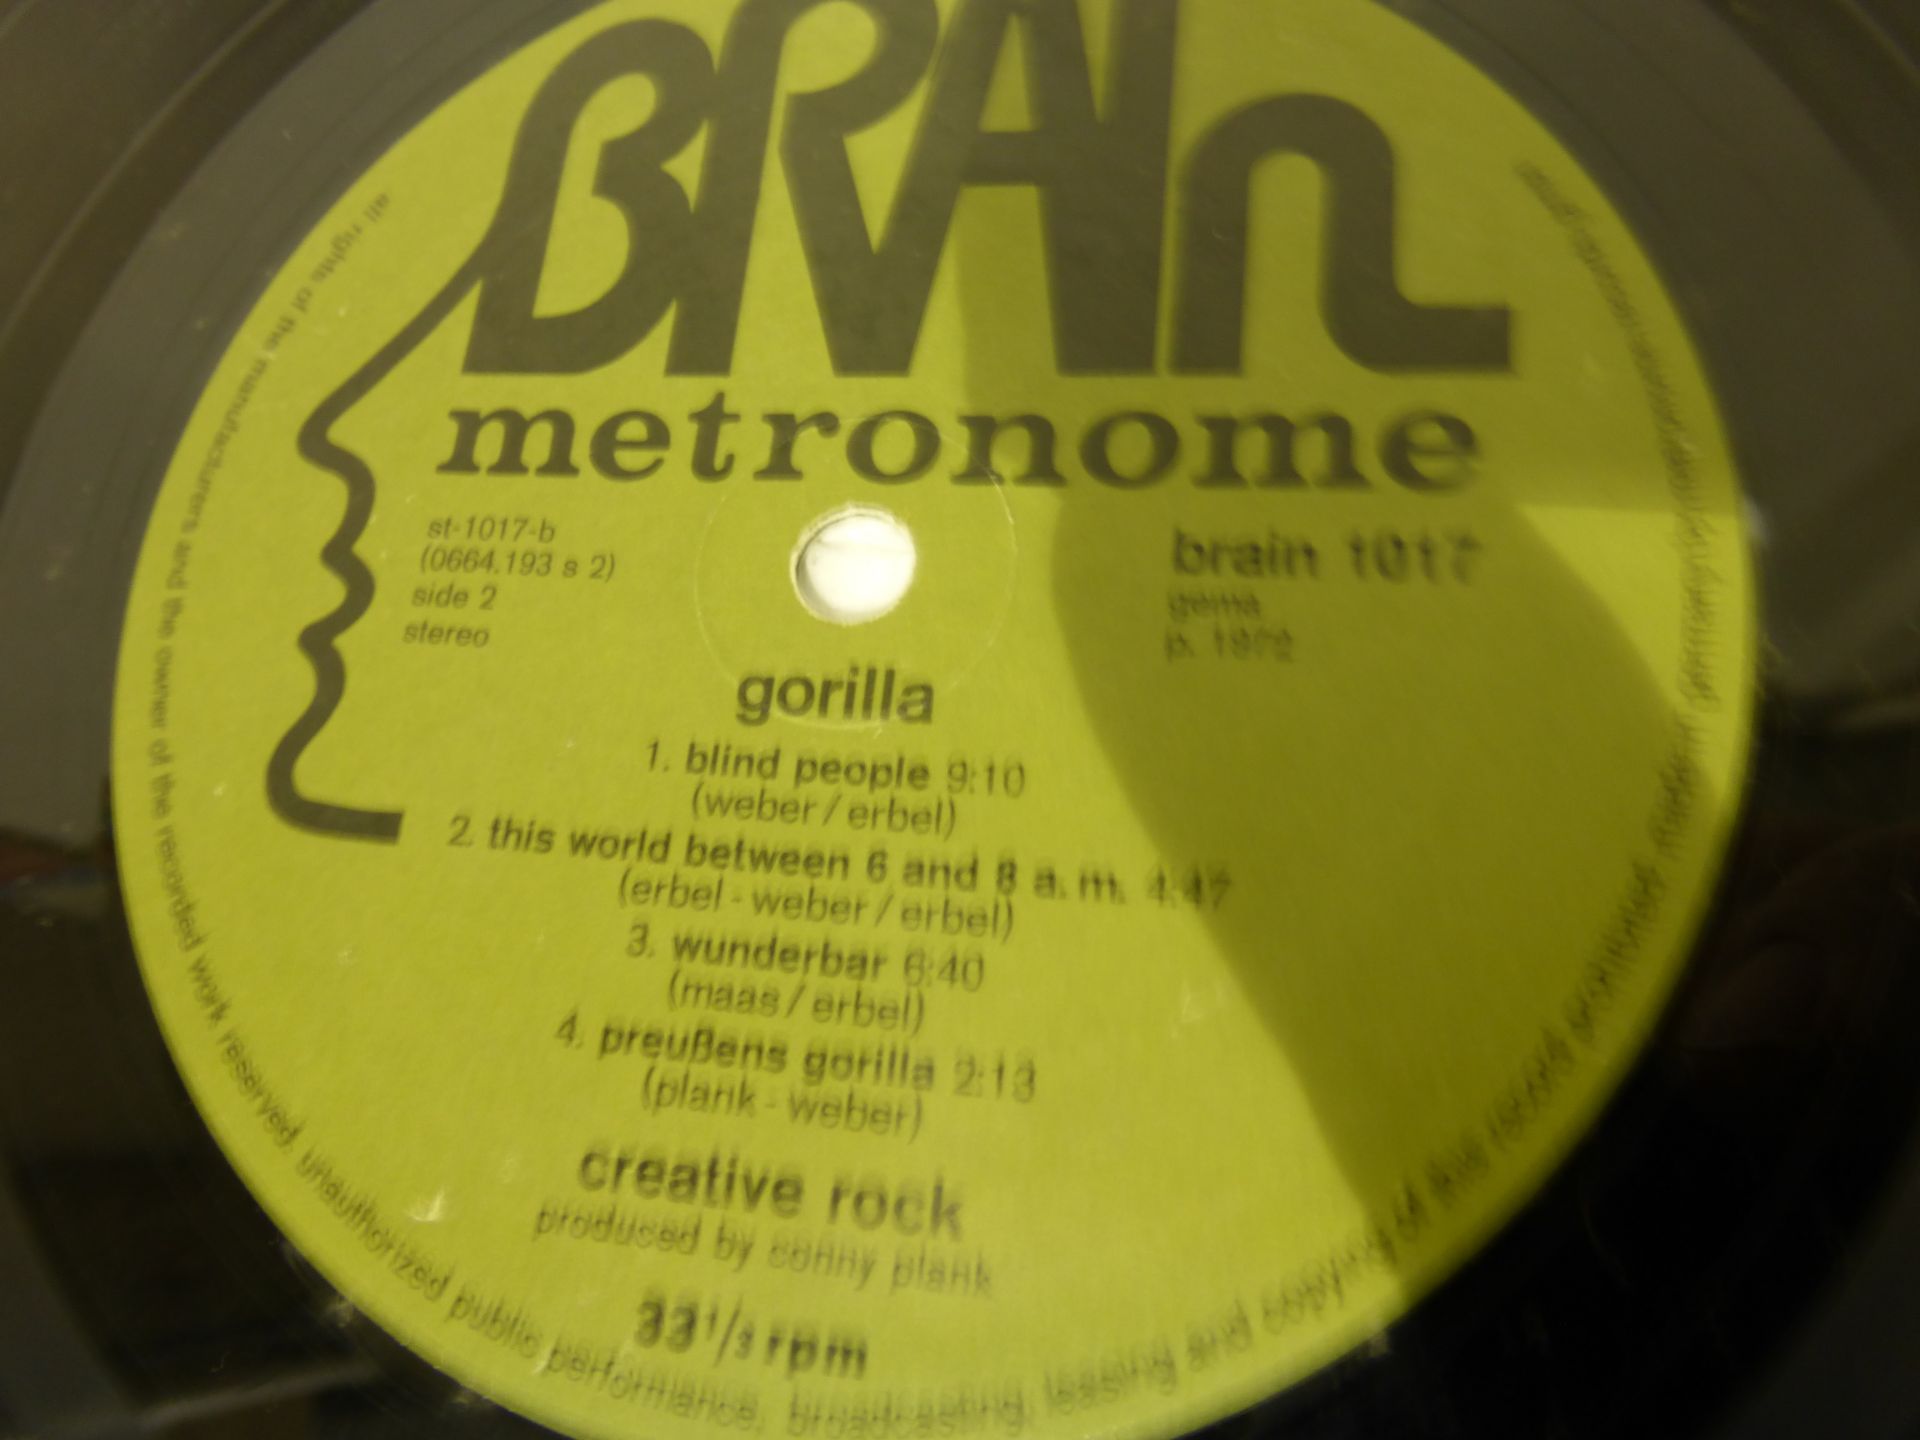 Creative Rock 'Gorilla' LP - Image 6 of 6